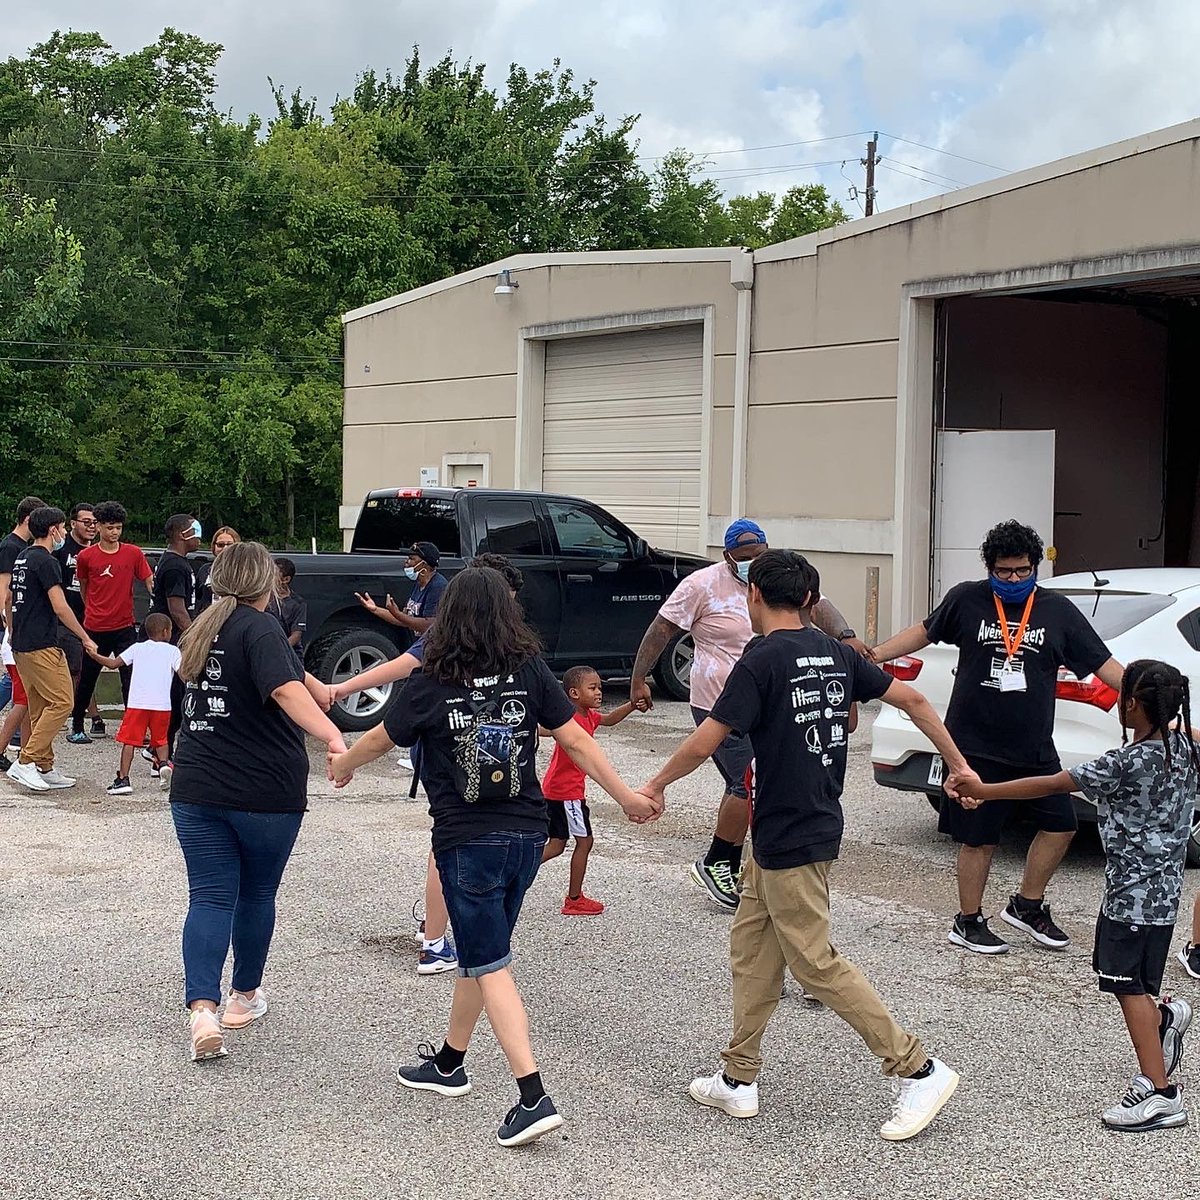 Avengers  summer Day camp Houston,Tx
6/21/21-7/23/21
#Avengeryouthmentoring #HobbyAieport #BTDT #HTX #HOUSTON #summercamp #DetriotMichigan #Detriot #Athleticcenter
thank you to all our sponsors
#workforcesolutions #HireHoustonyouth #mediatechinstiue #connectDetriot #Goodsports